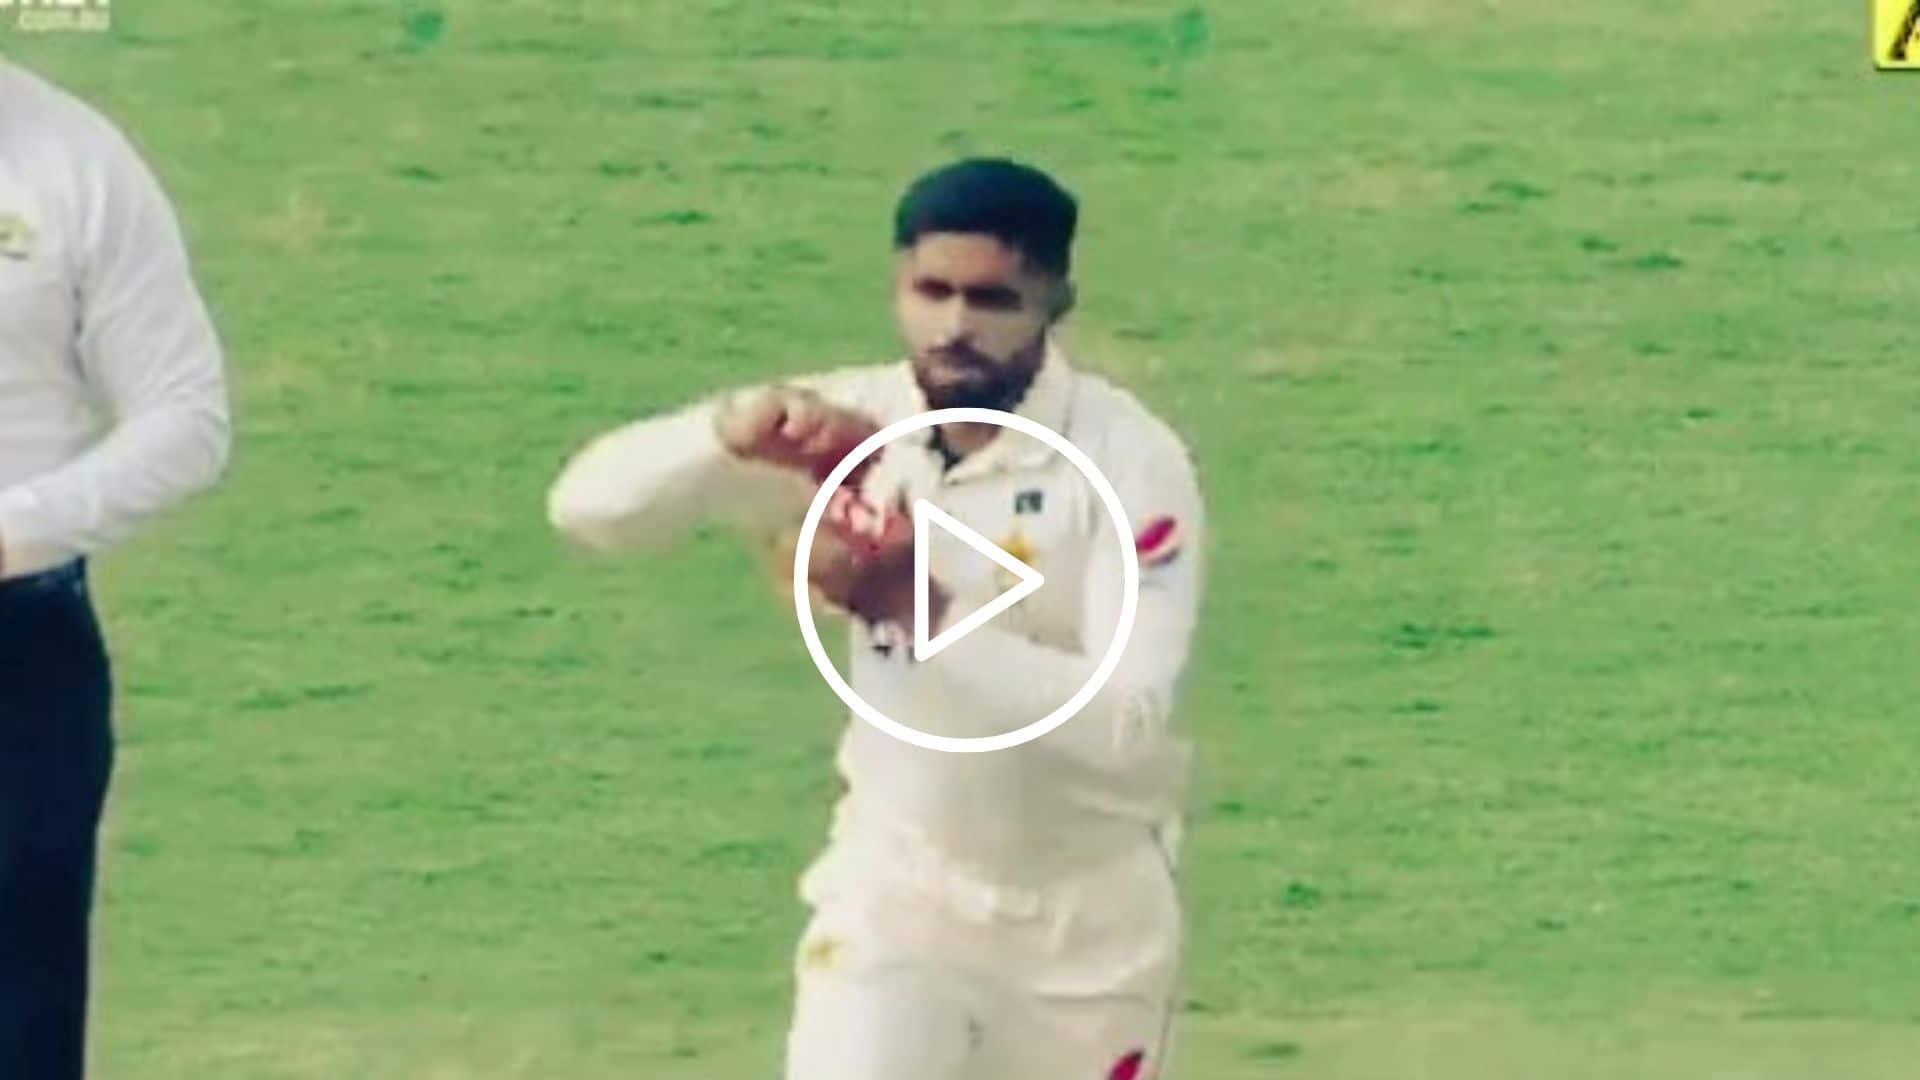 [Watch] Pakistan's Babar Azam Ditches The Bat & Takes Up Bowling vs Australia